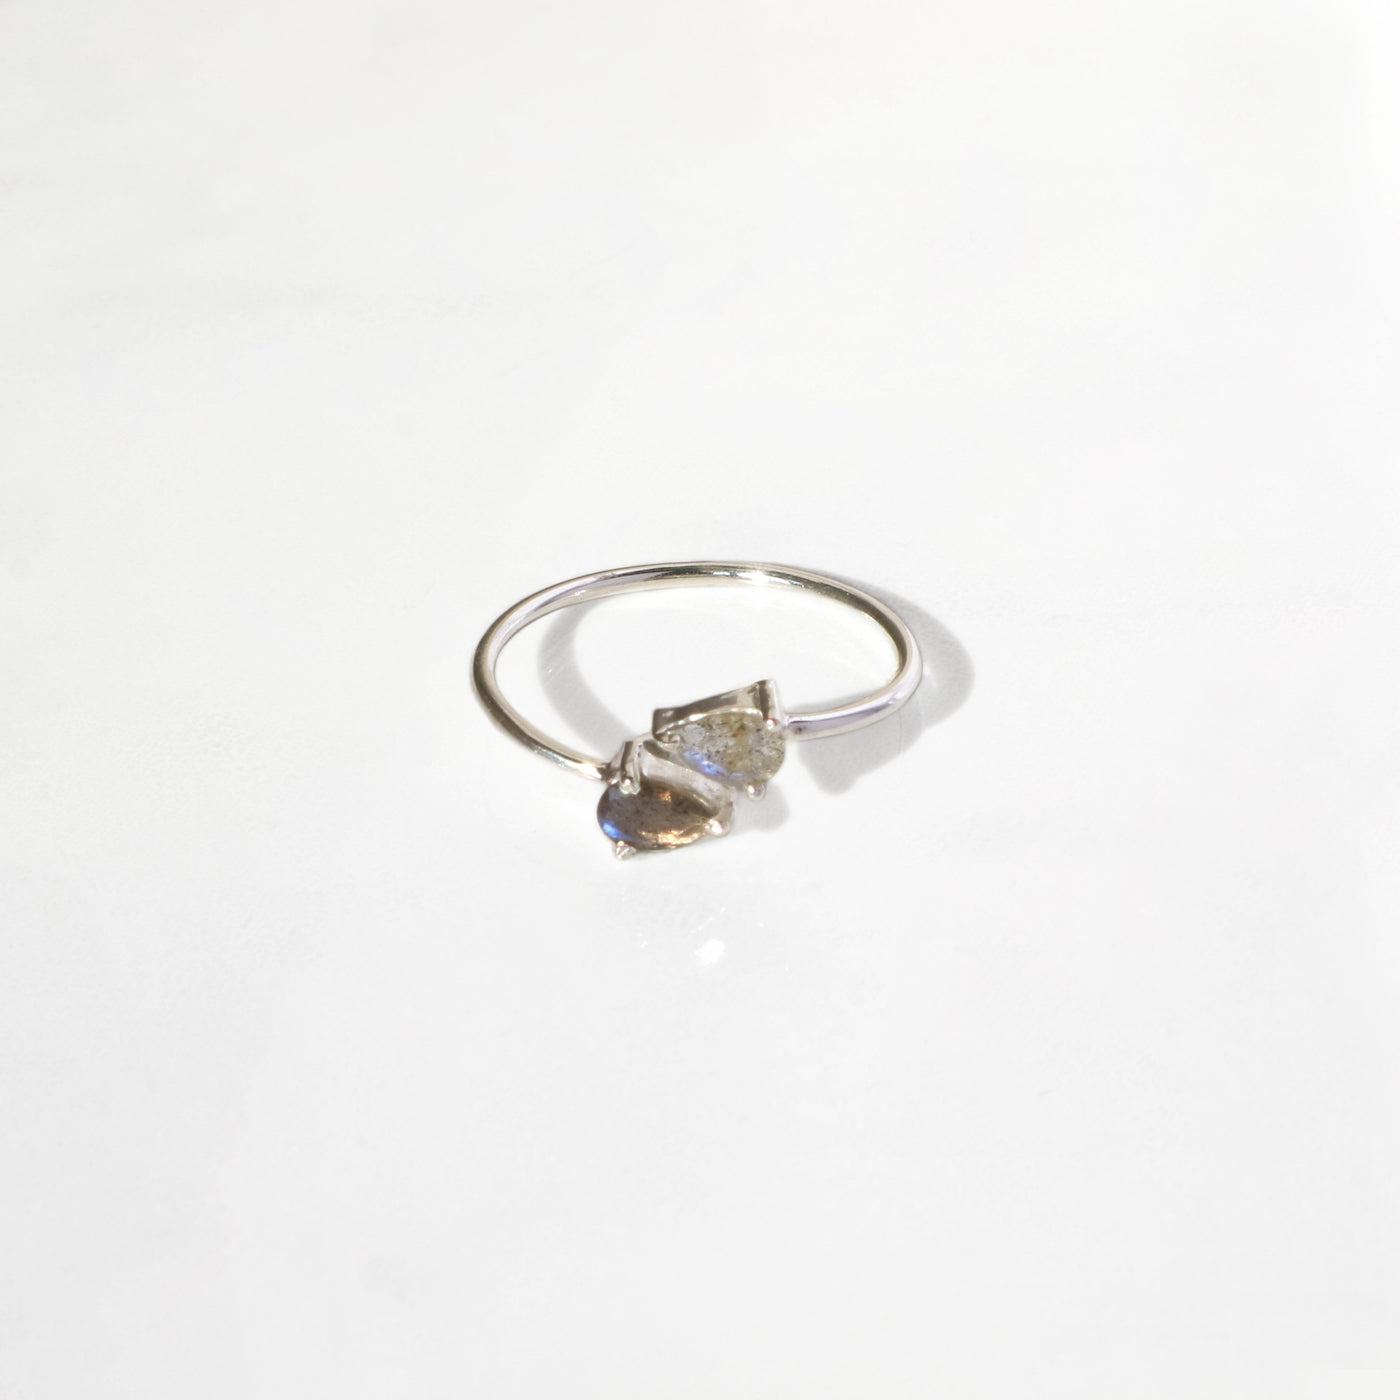 Labradorite gemstone teardrop adjustable silver ring, Rani & Co. Jewellery